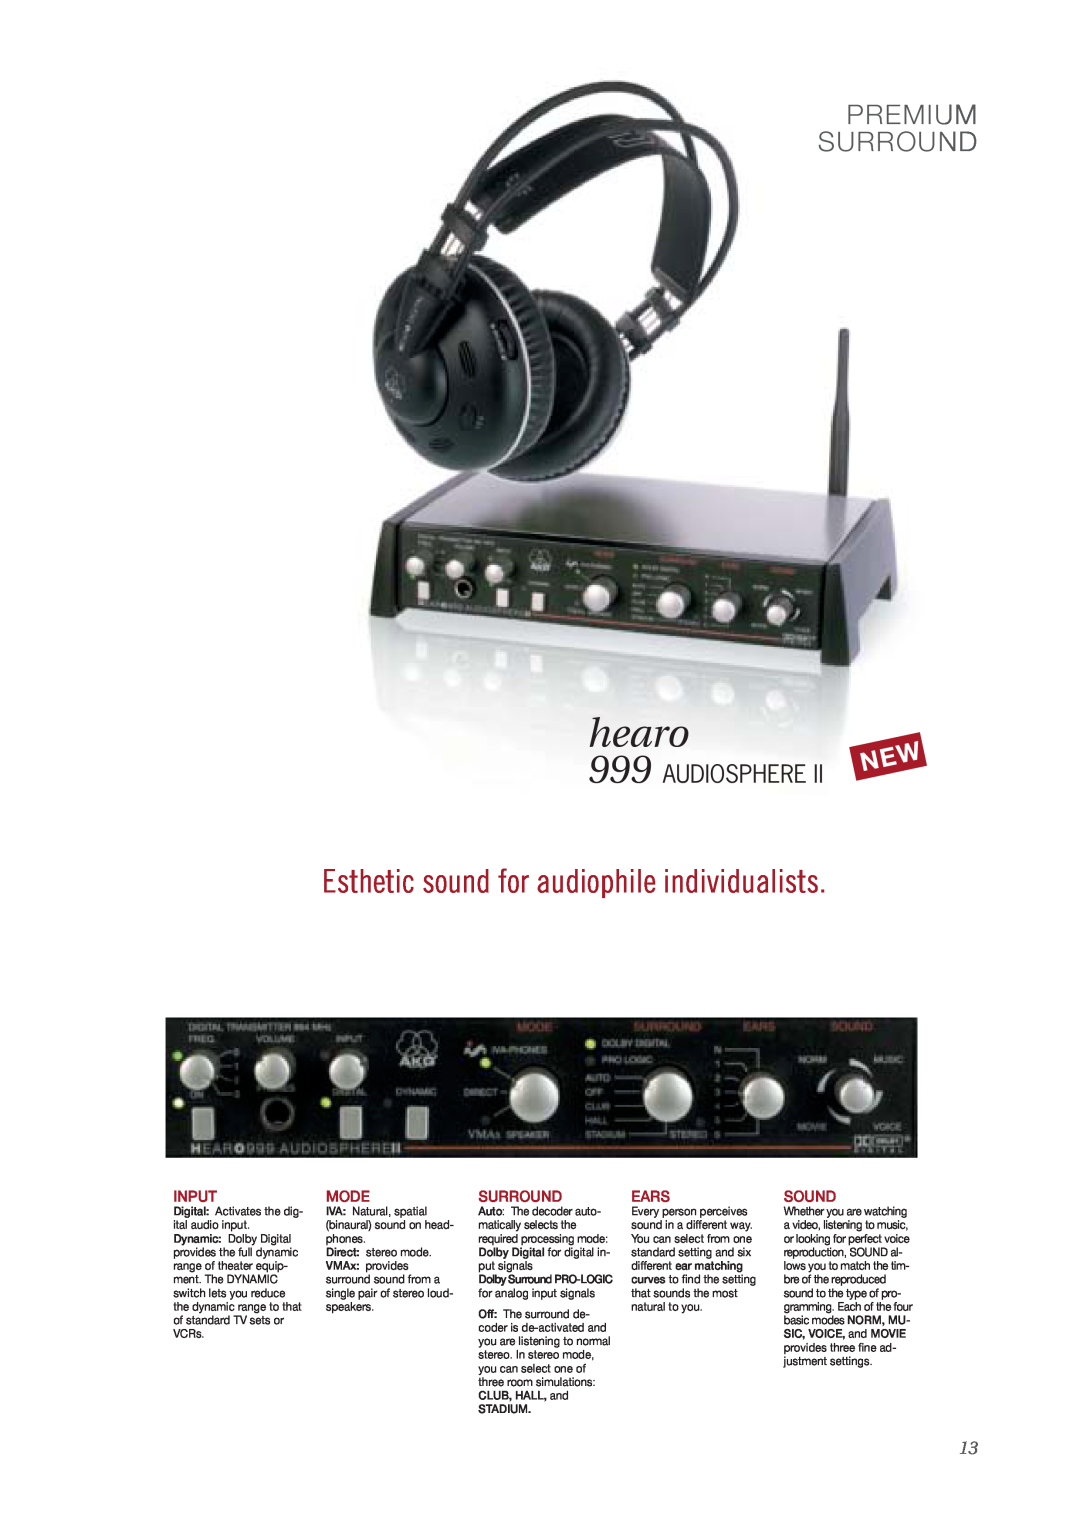 AKG Acoustics surround headphones Esthetic sound for audiophile individualists, Premium Surround, Audiosphere, Input, Mode 